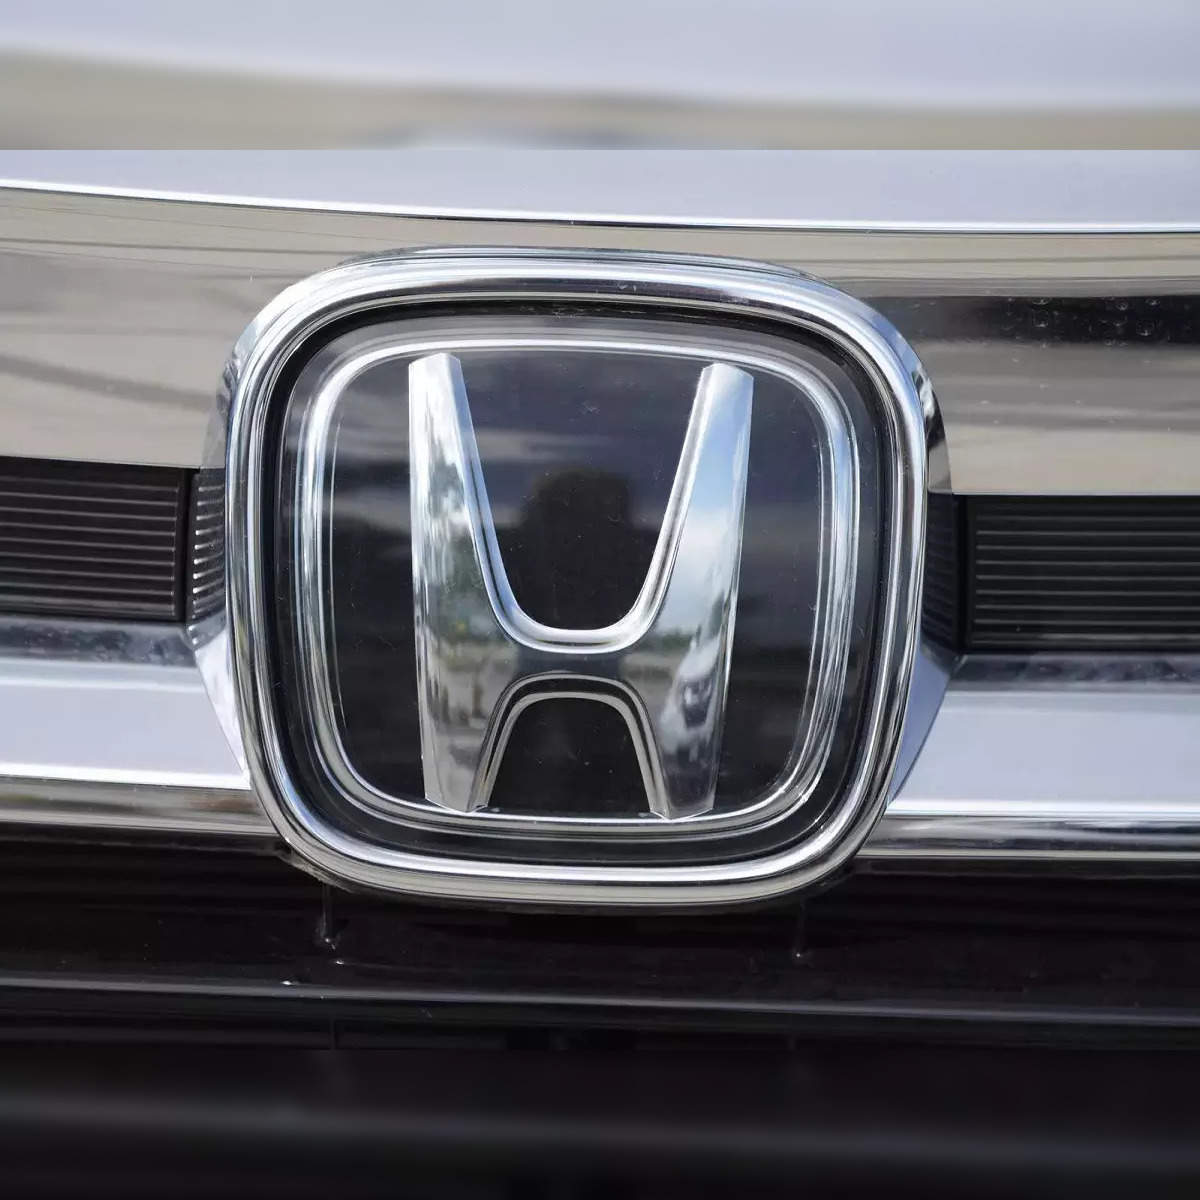 Honda To Shift Focus To Premium Cars Again - Forbes India